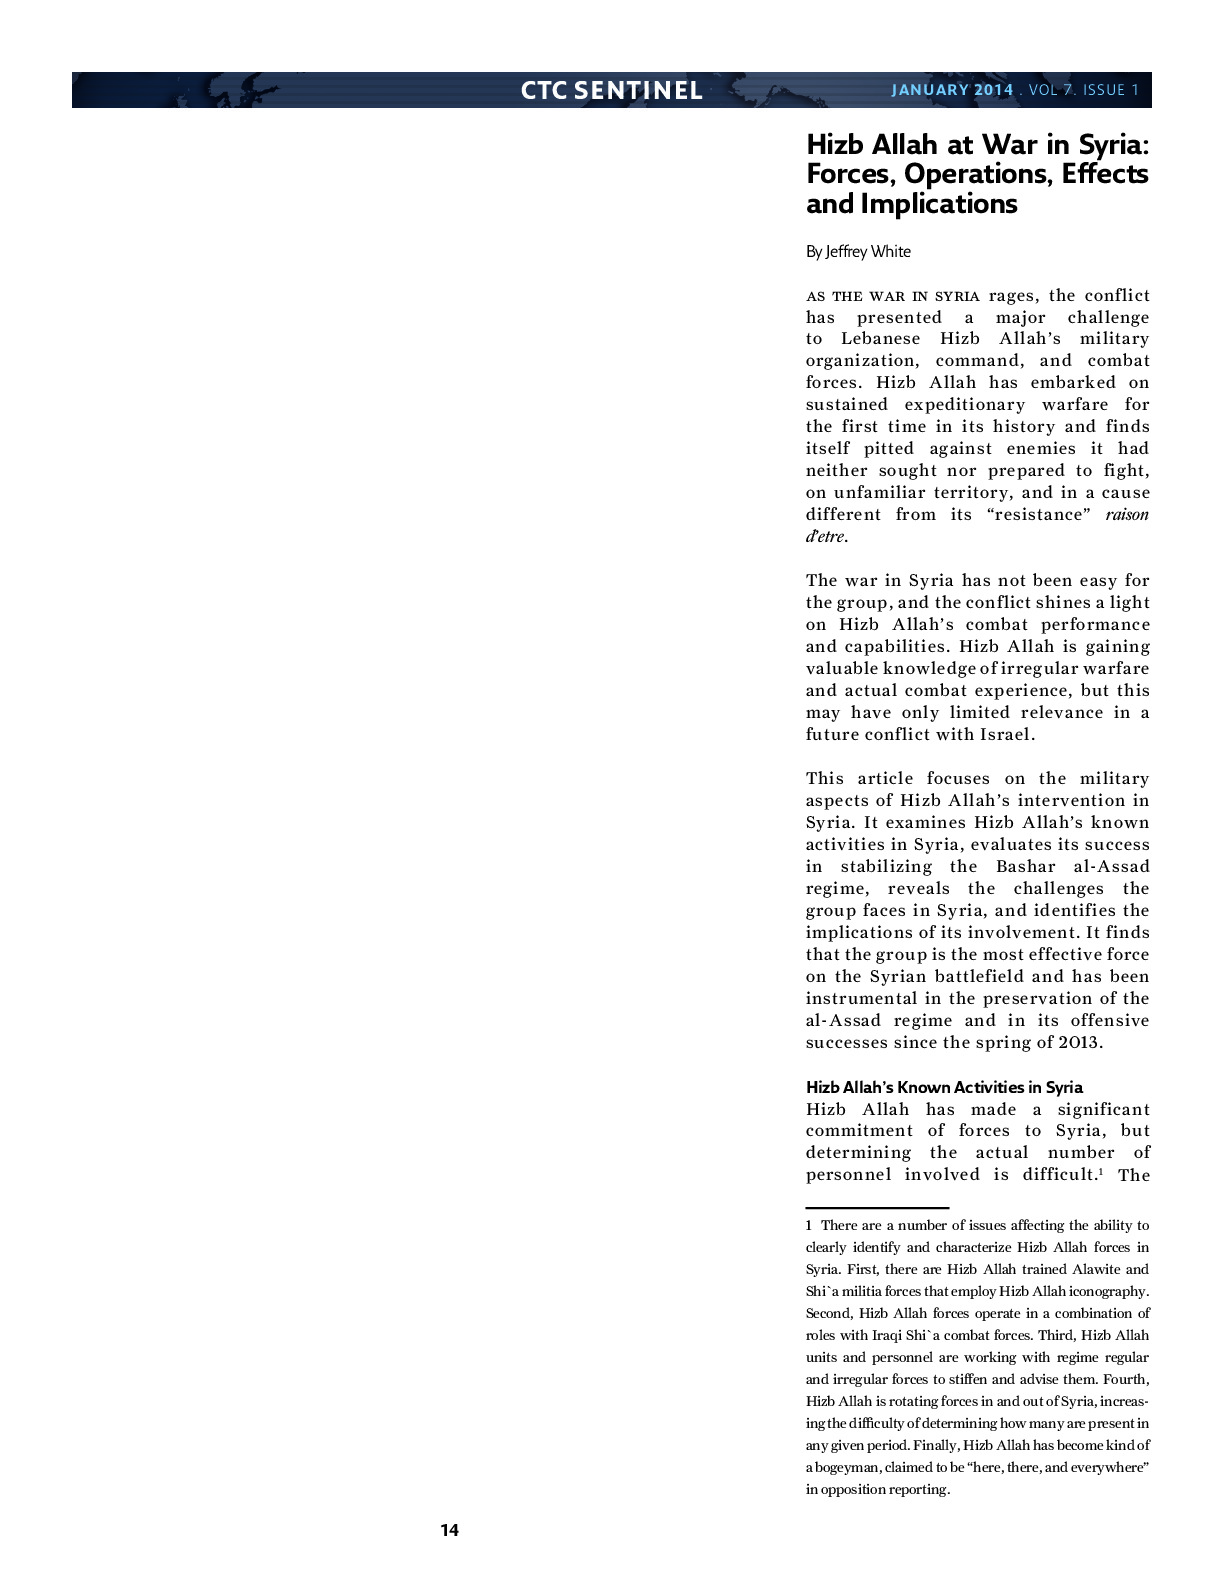 White20140115-CTCSentinel.pdf